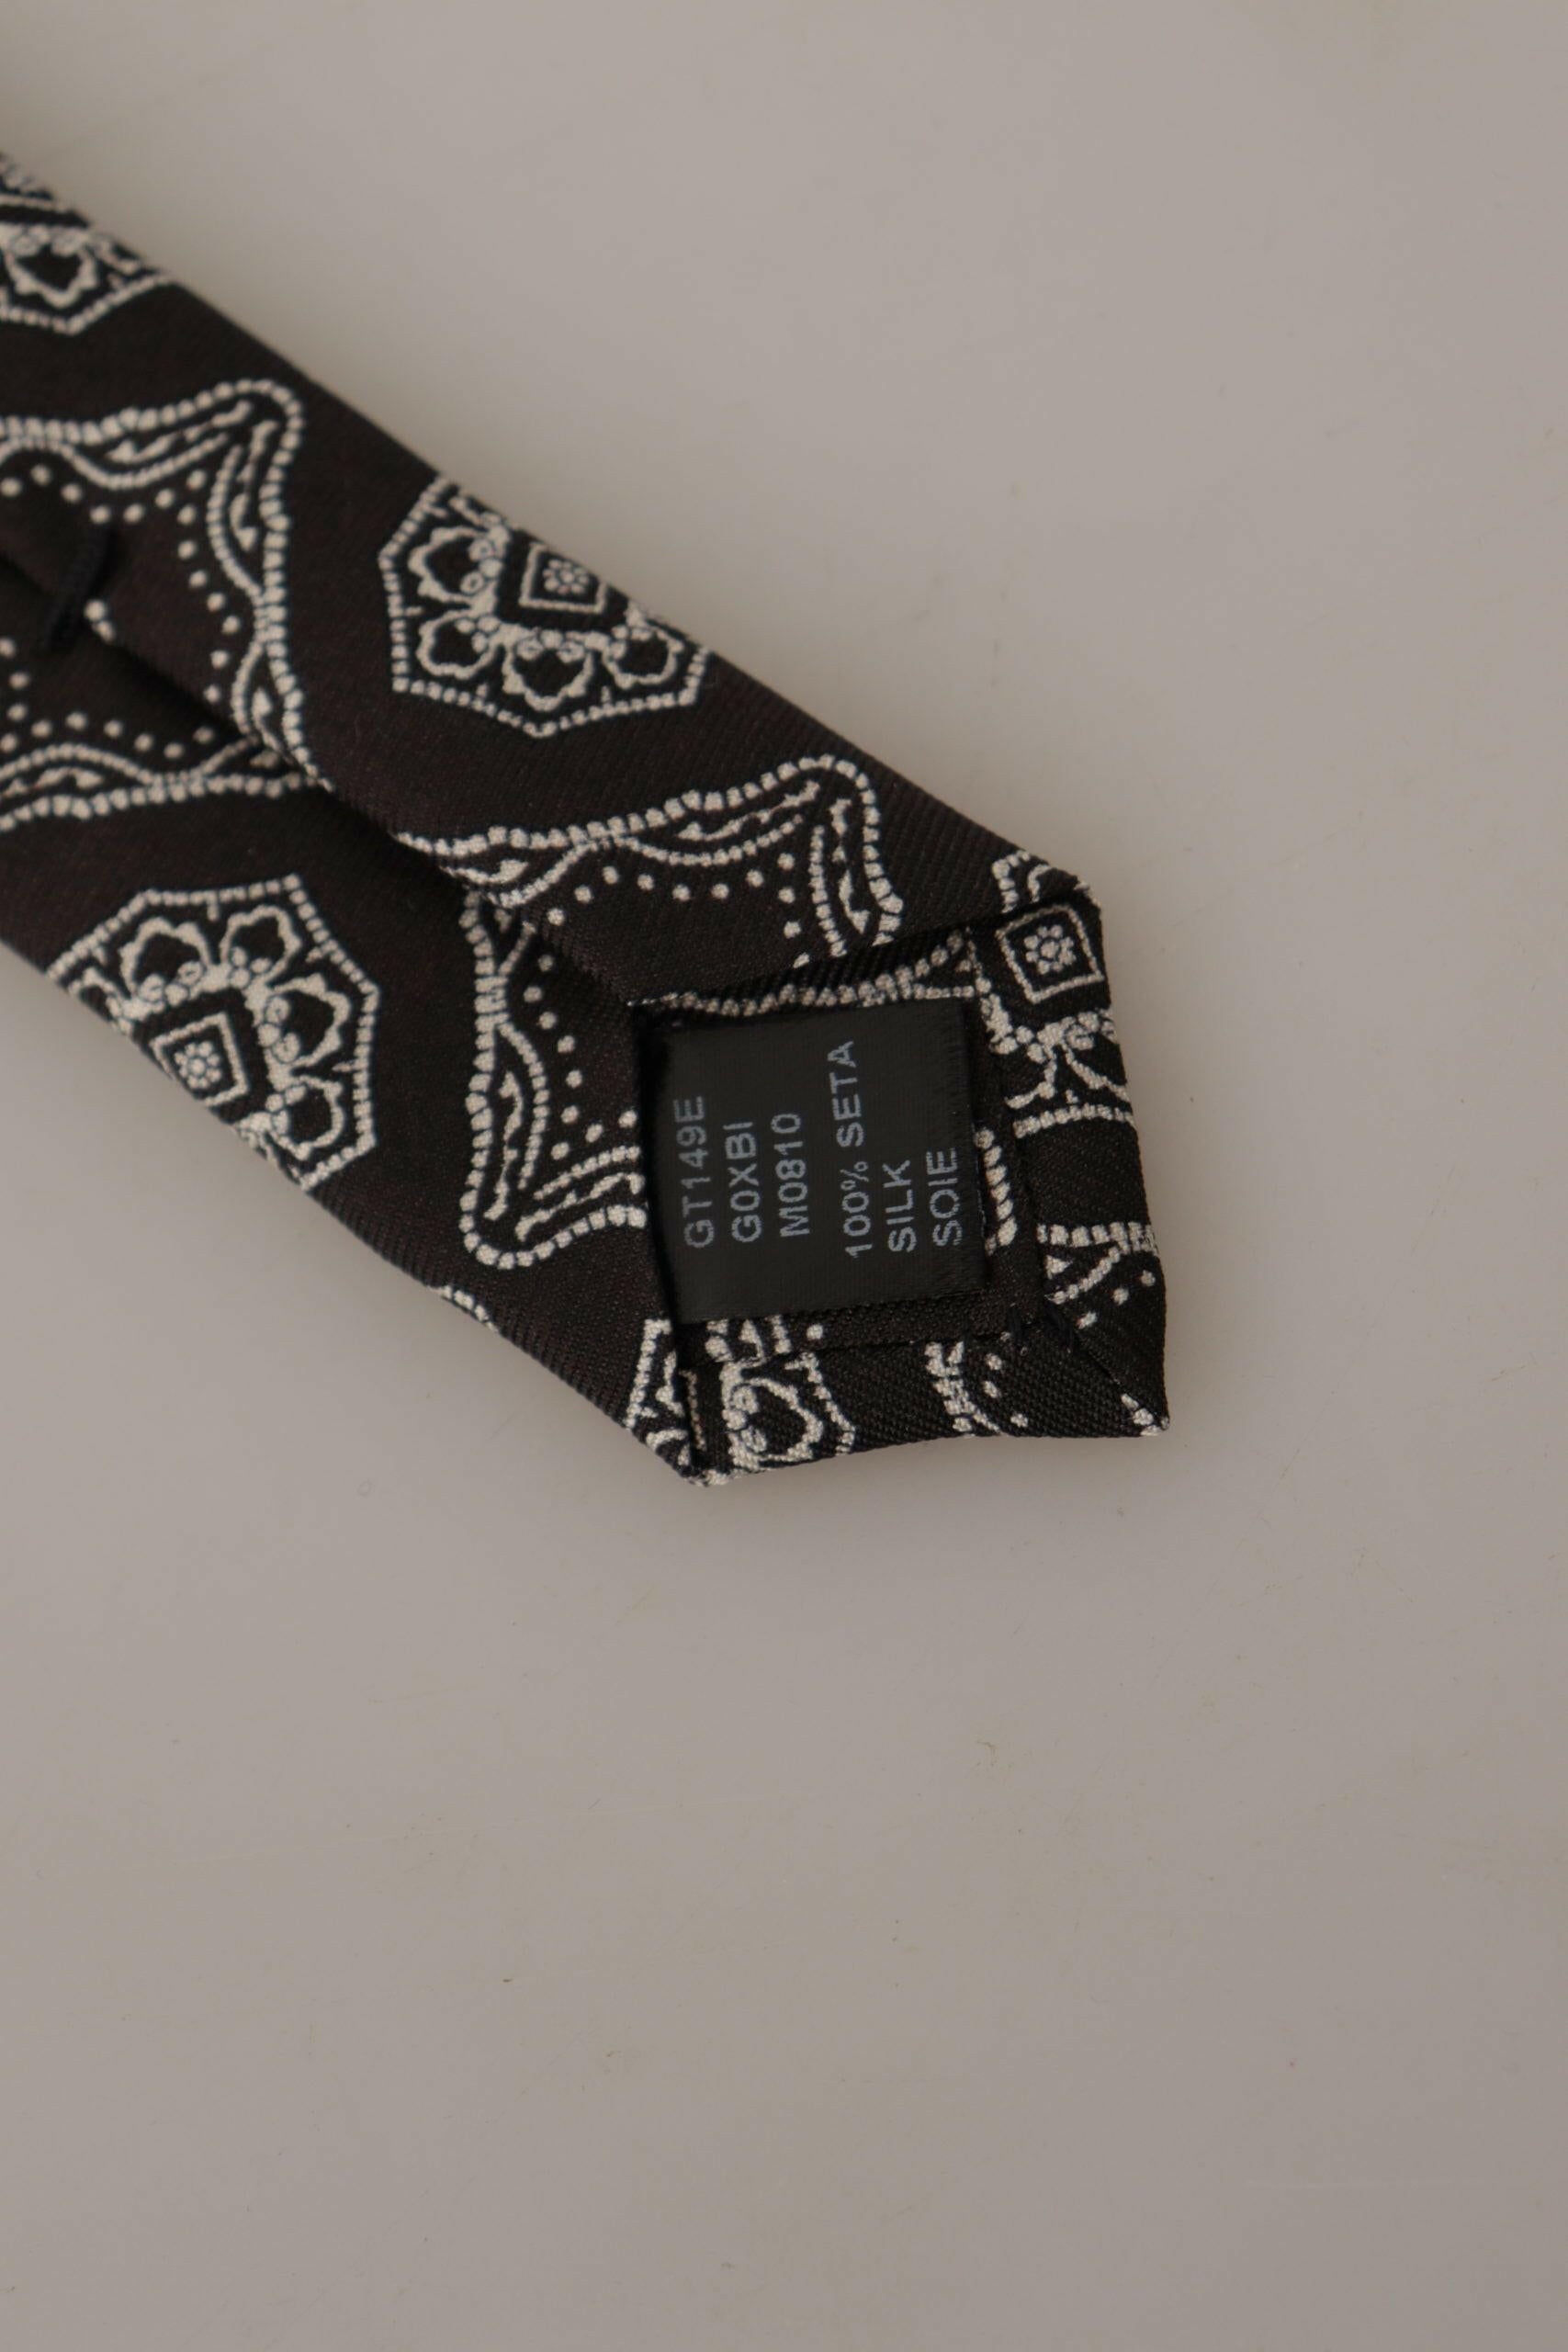 Dolce & Gabbana Black White Square Geometric Print Adjustable Accessory Tie - GENUINE AUTHENTIC BRAND LLC  